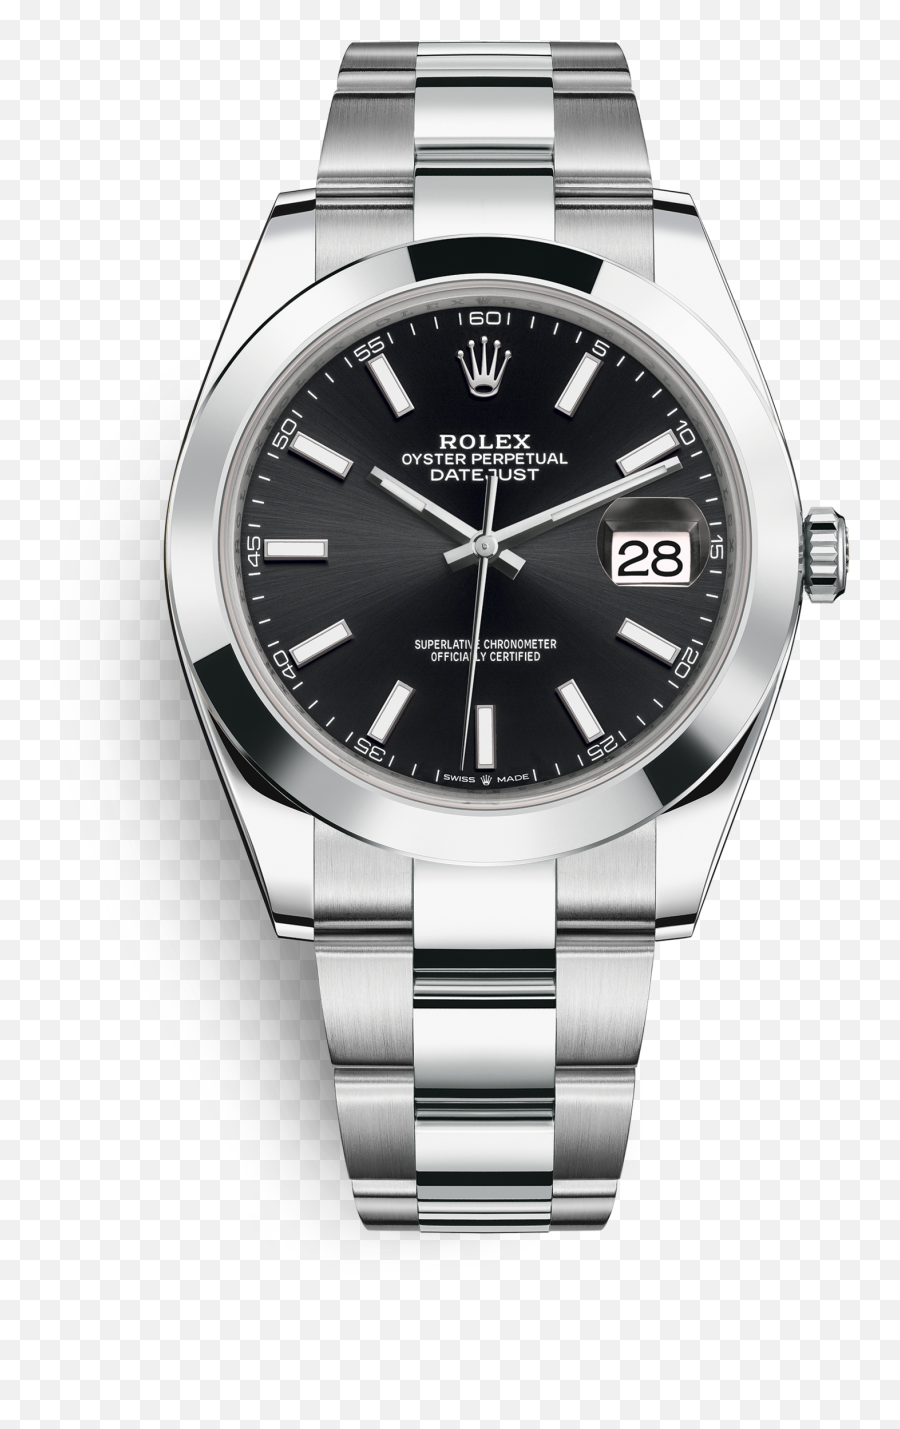 Oystersteel - Rolex Datejust 41 Png,Rolex Watch Png